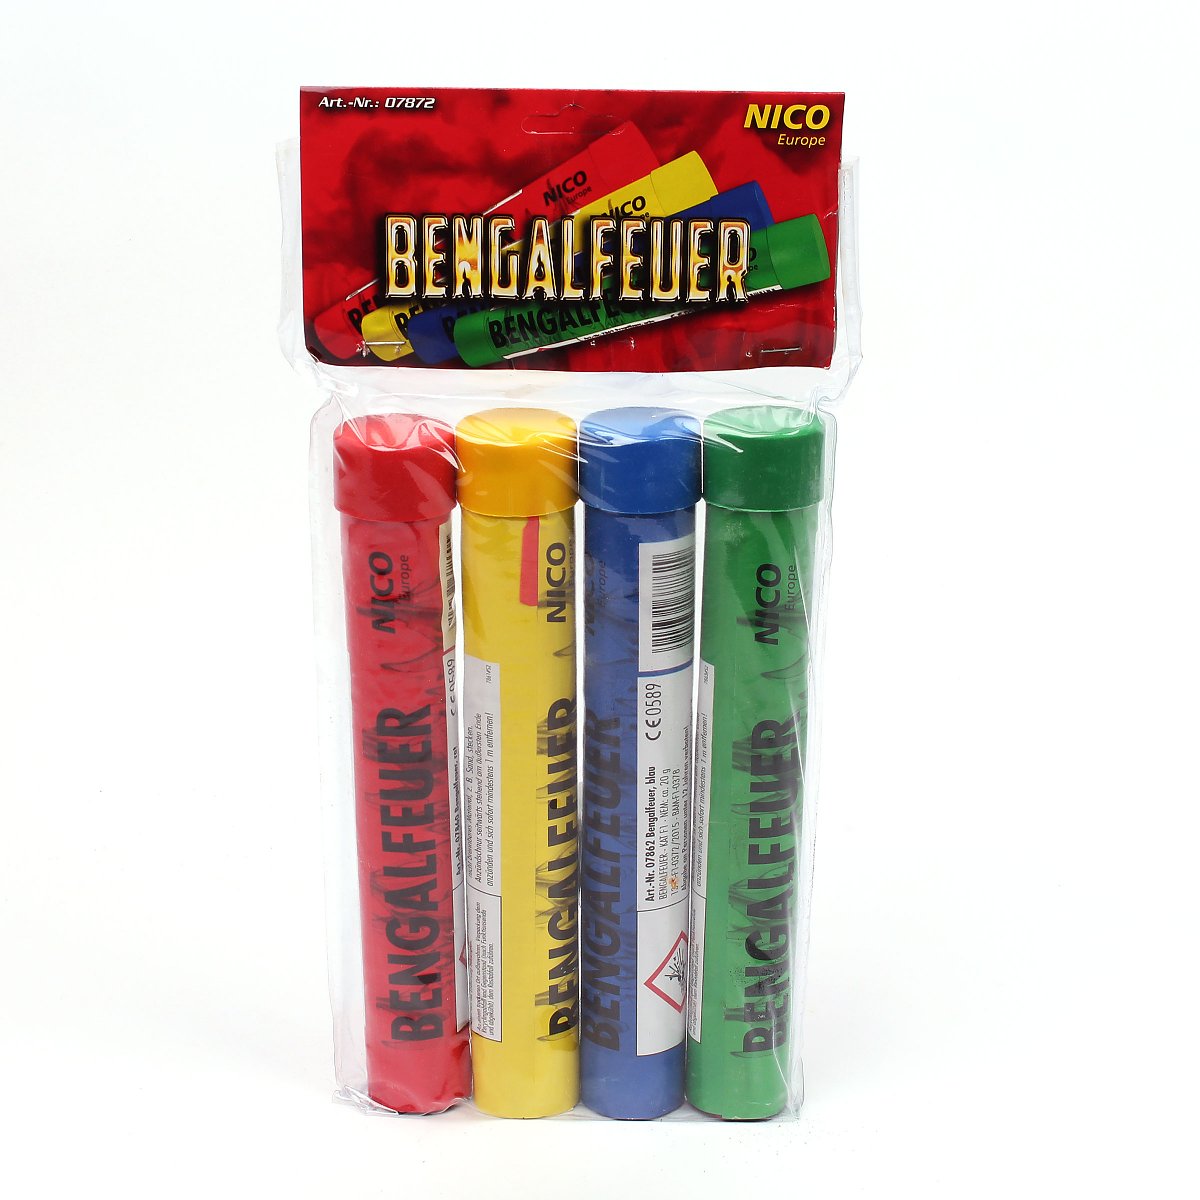 Bengalfeuer /nico Feuerwerk/ BENGALOS In grün online kaufen